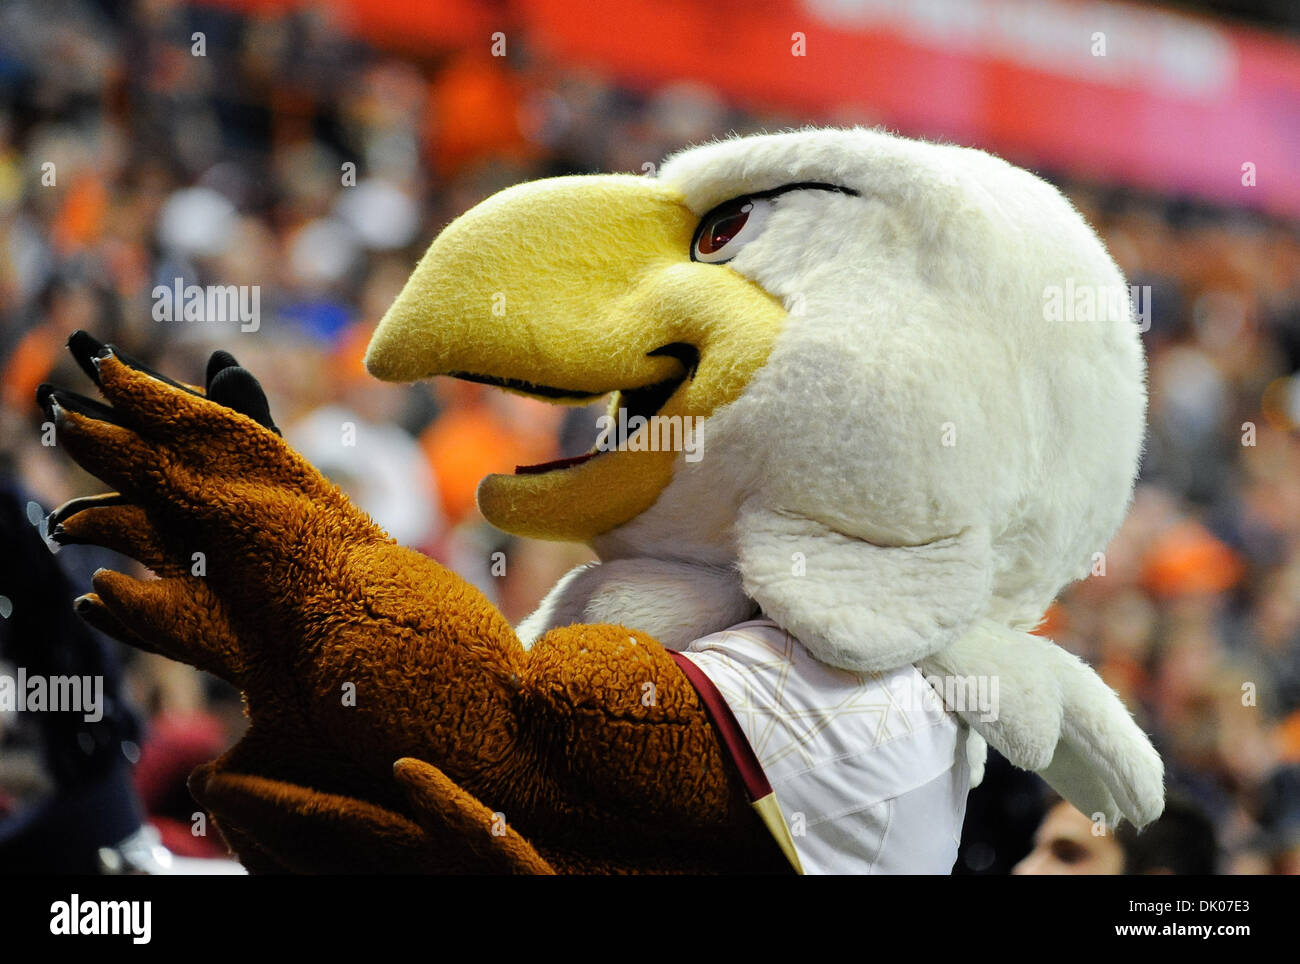 Mascota del águila fotografías e imágenes de alta resolución - Alamy